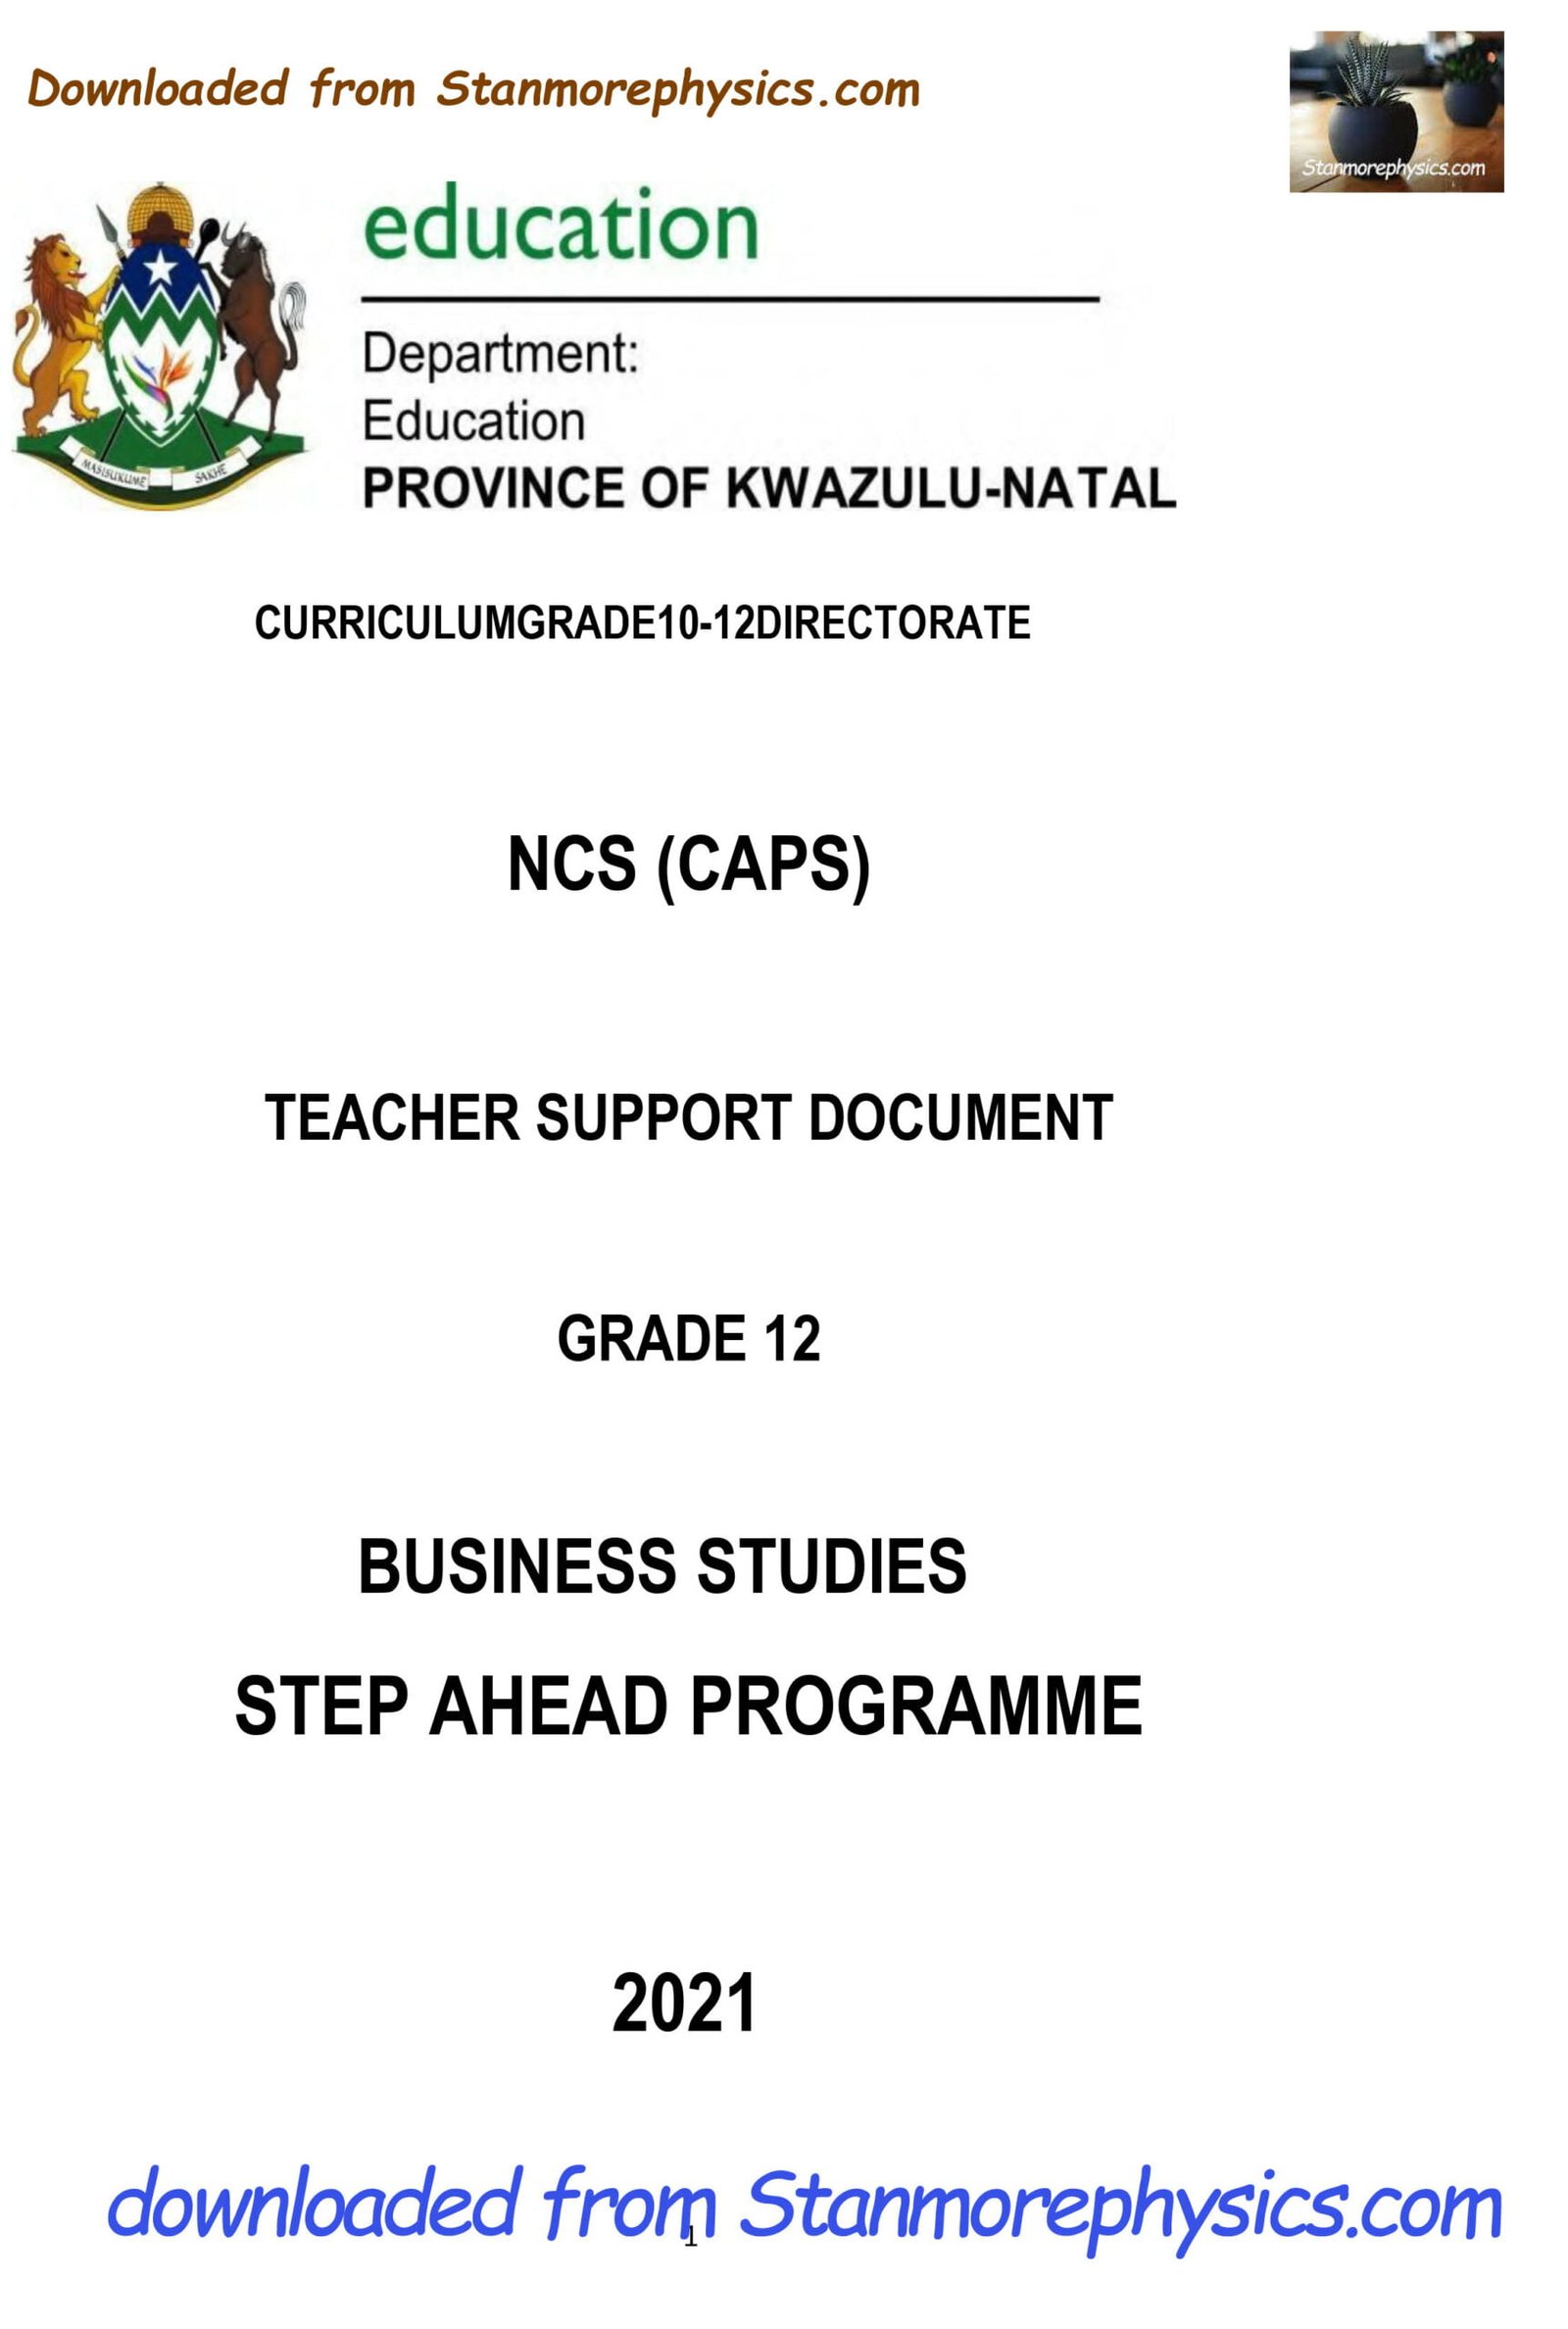 business studies presentation grade 12 2021 memorandum